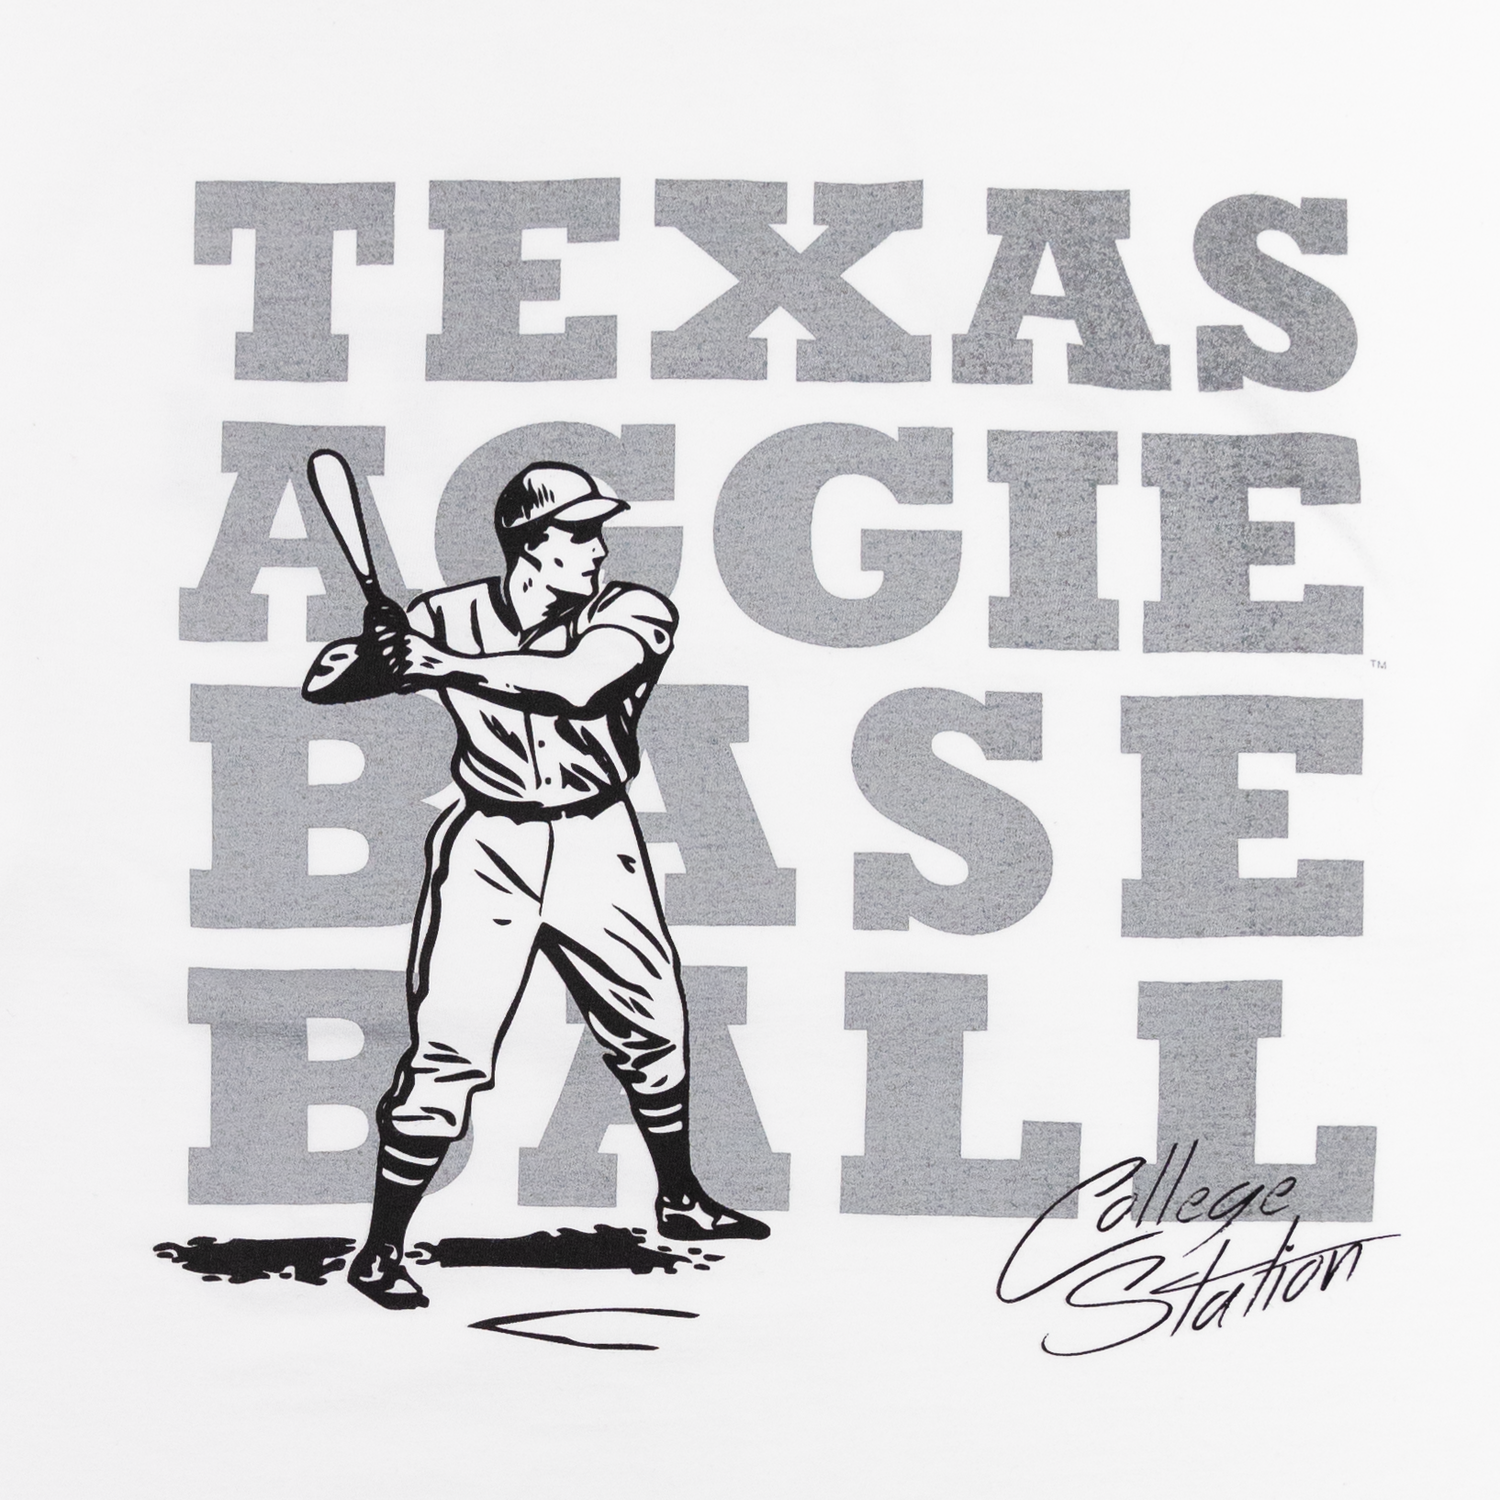 Texas A&M Swing Batter Batter White T-Shirt